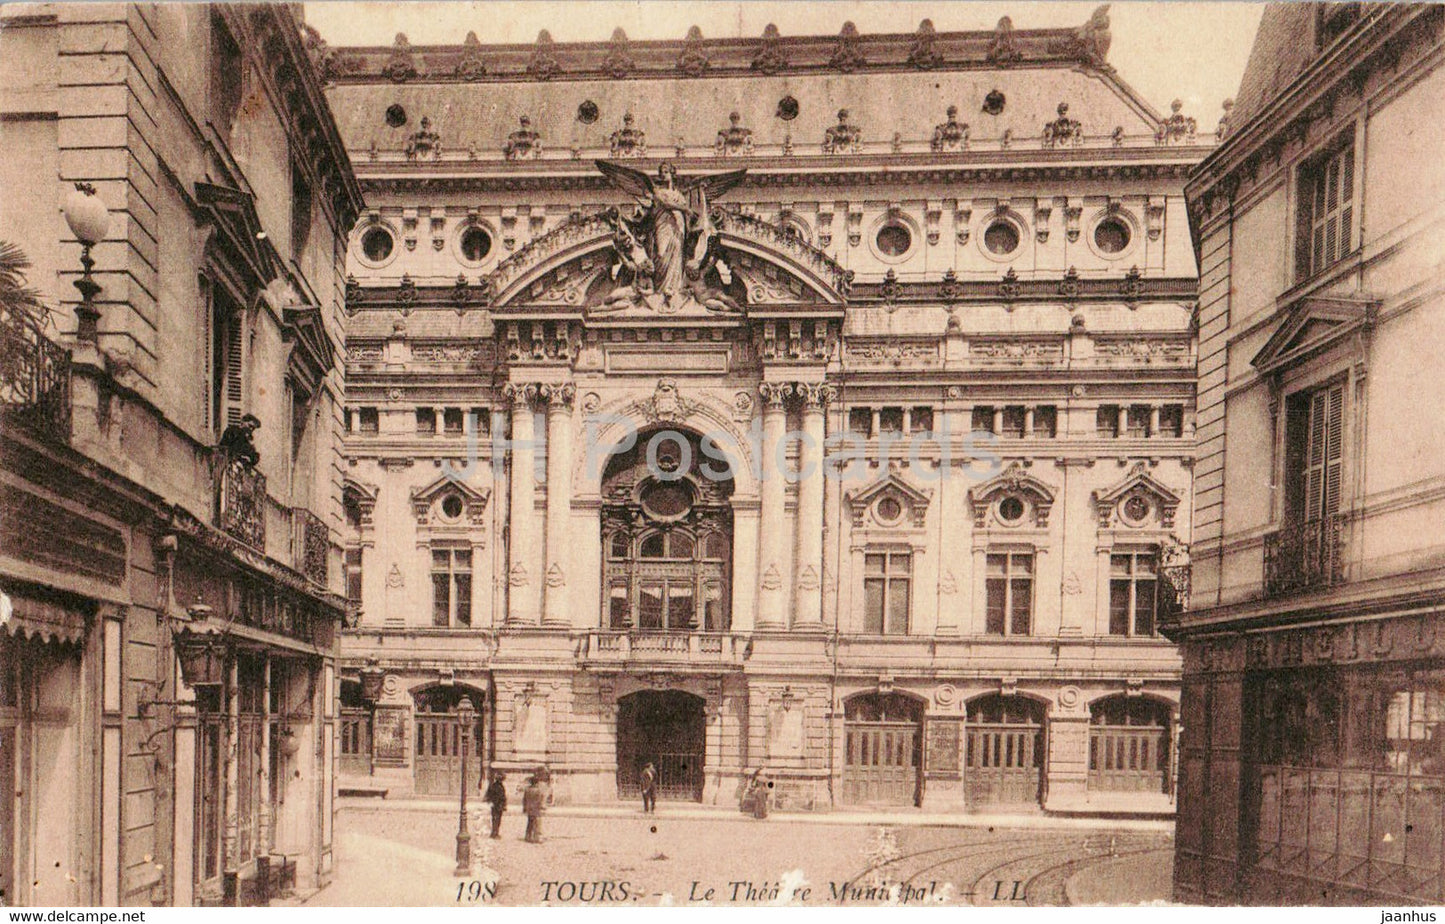 Tours - Theatre Municipal - 198 - old postcard - France - unused - JH Postcards